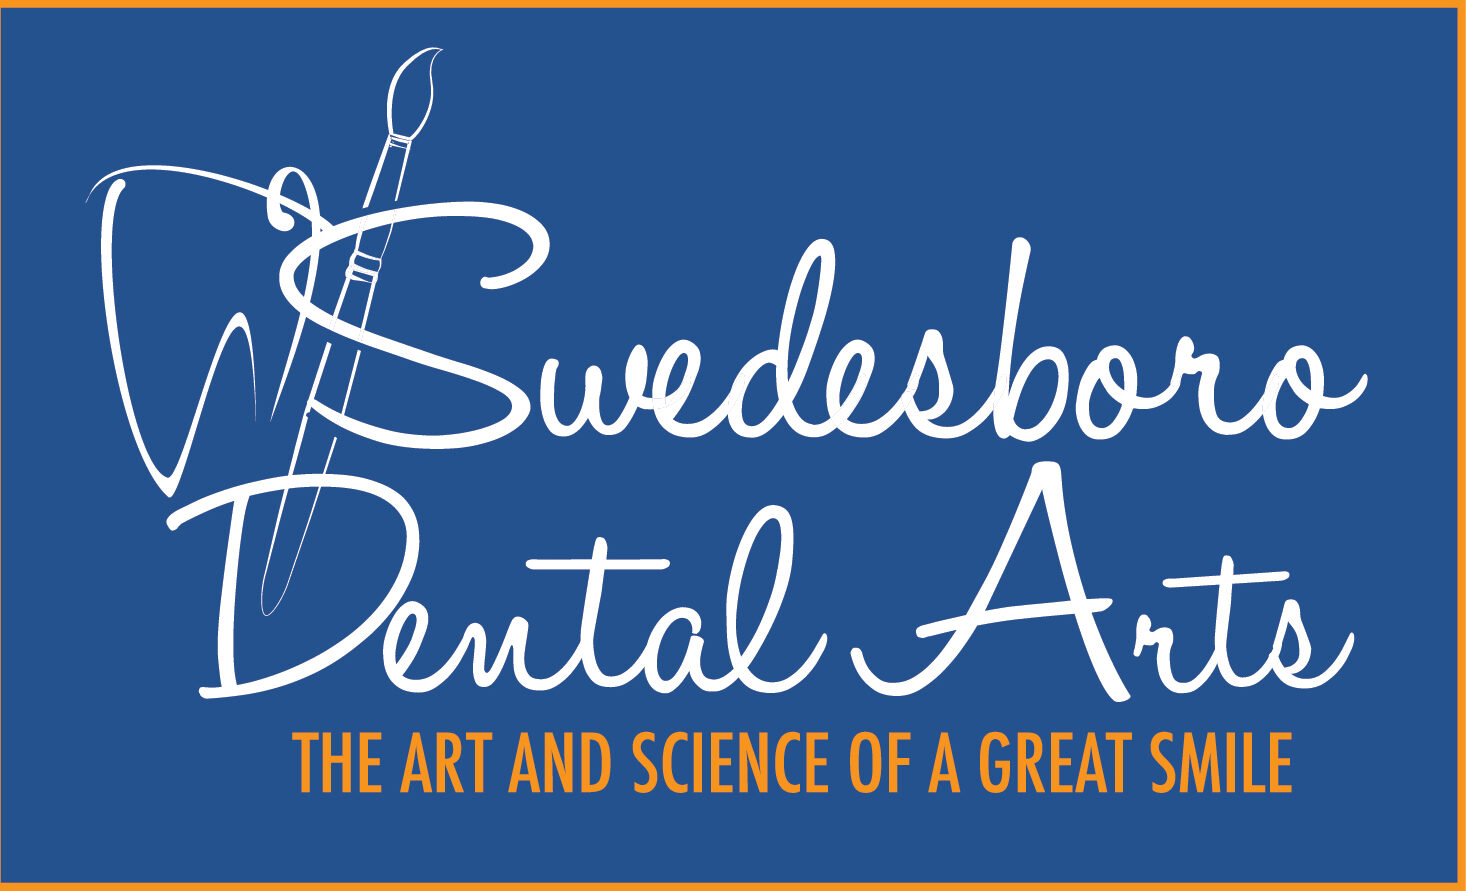 Swedesboro Dental Arts